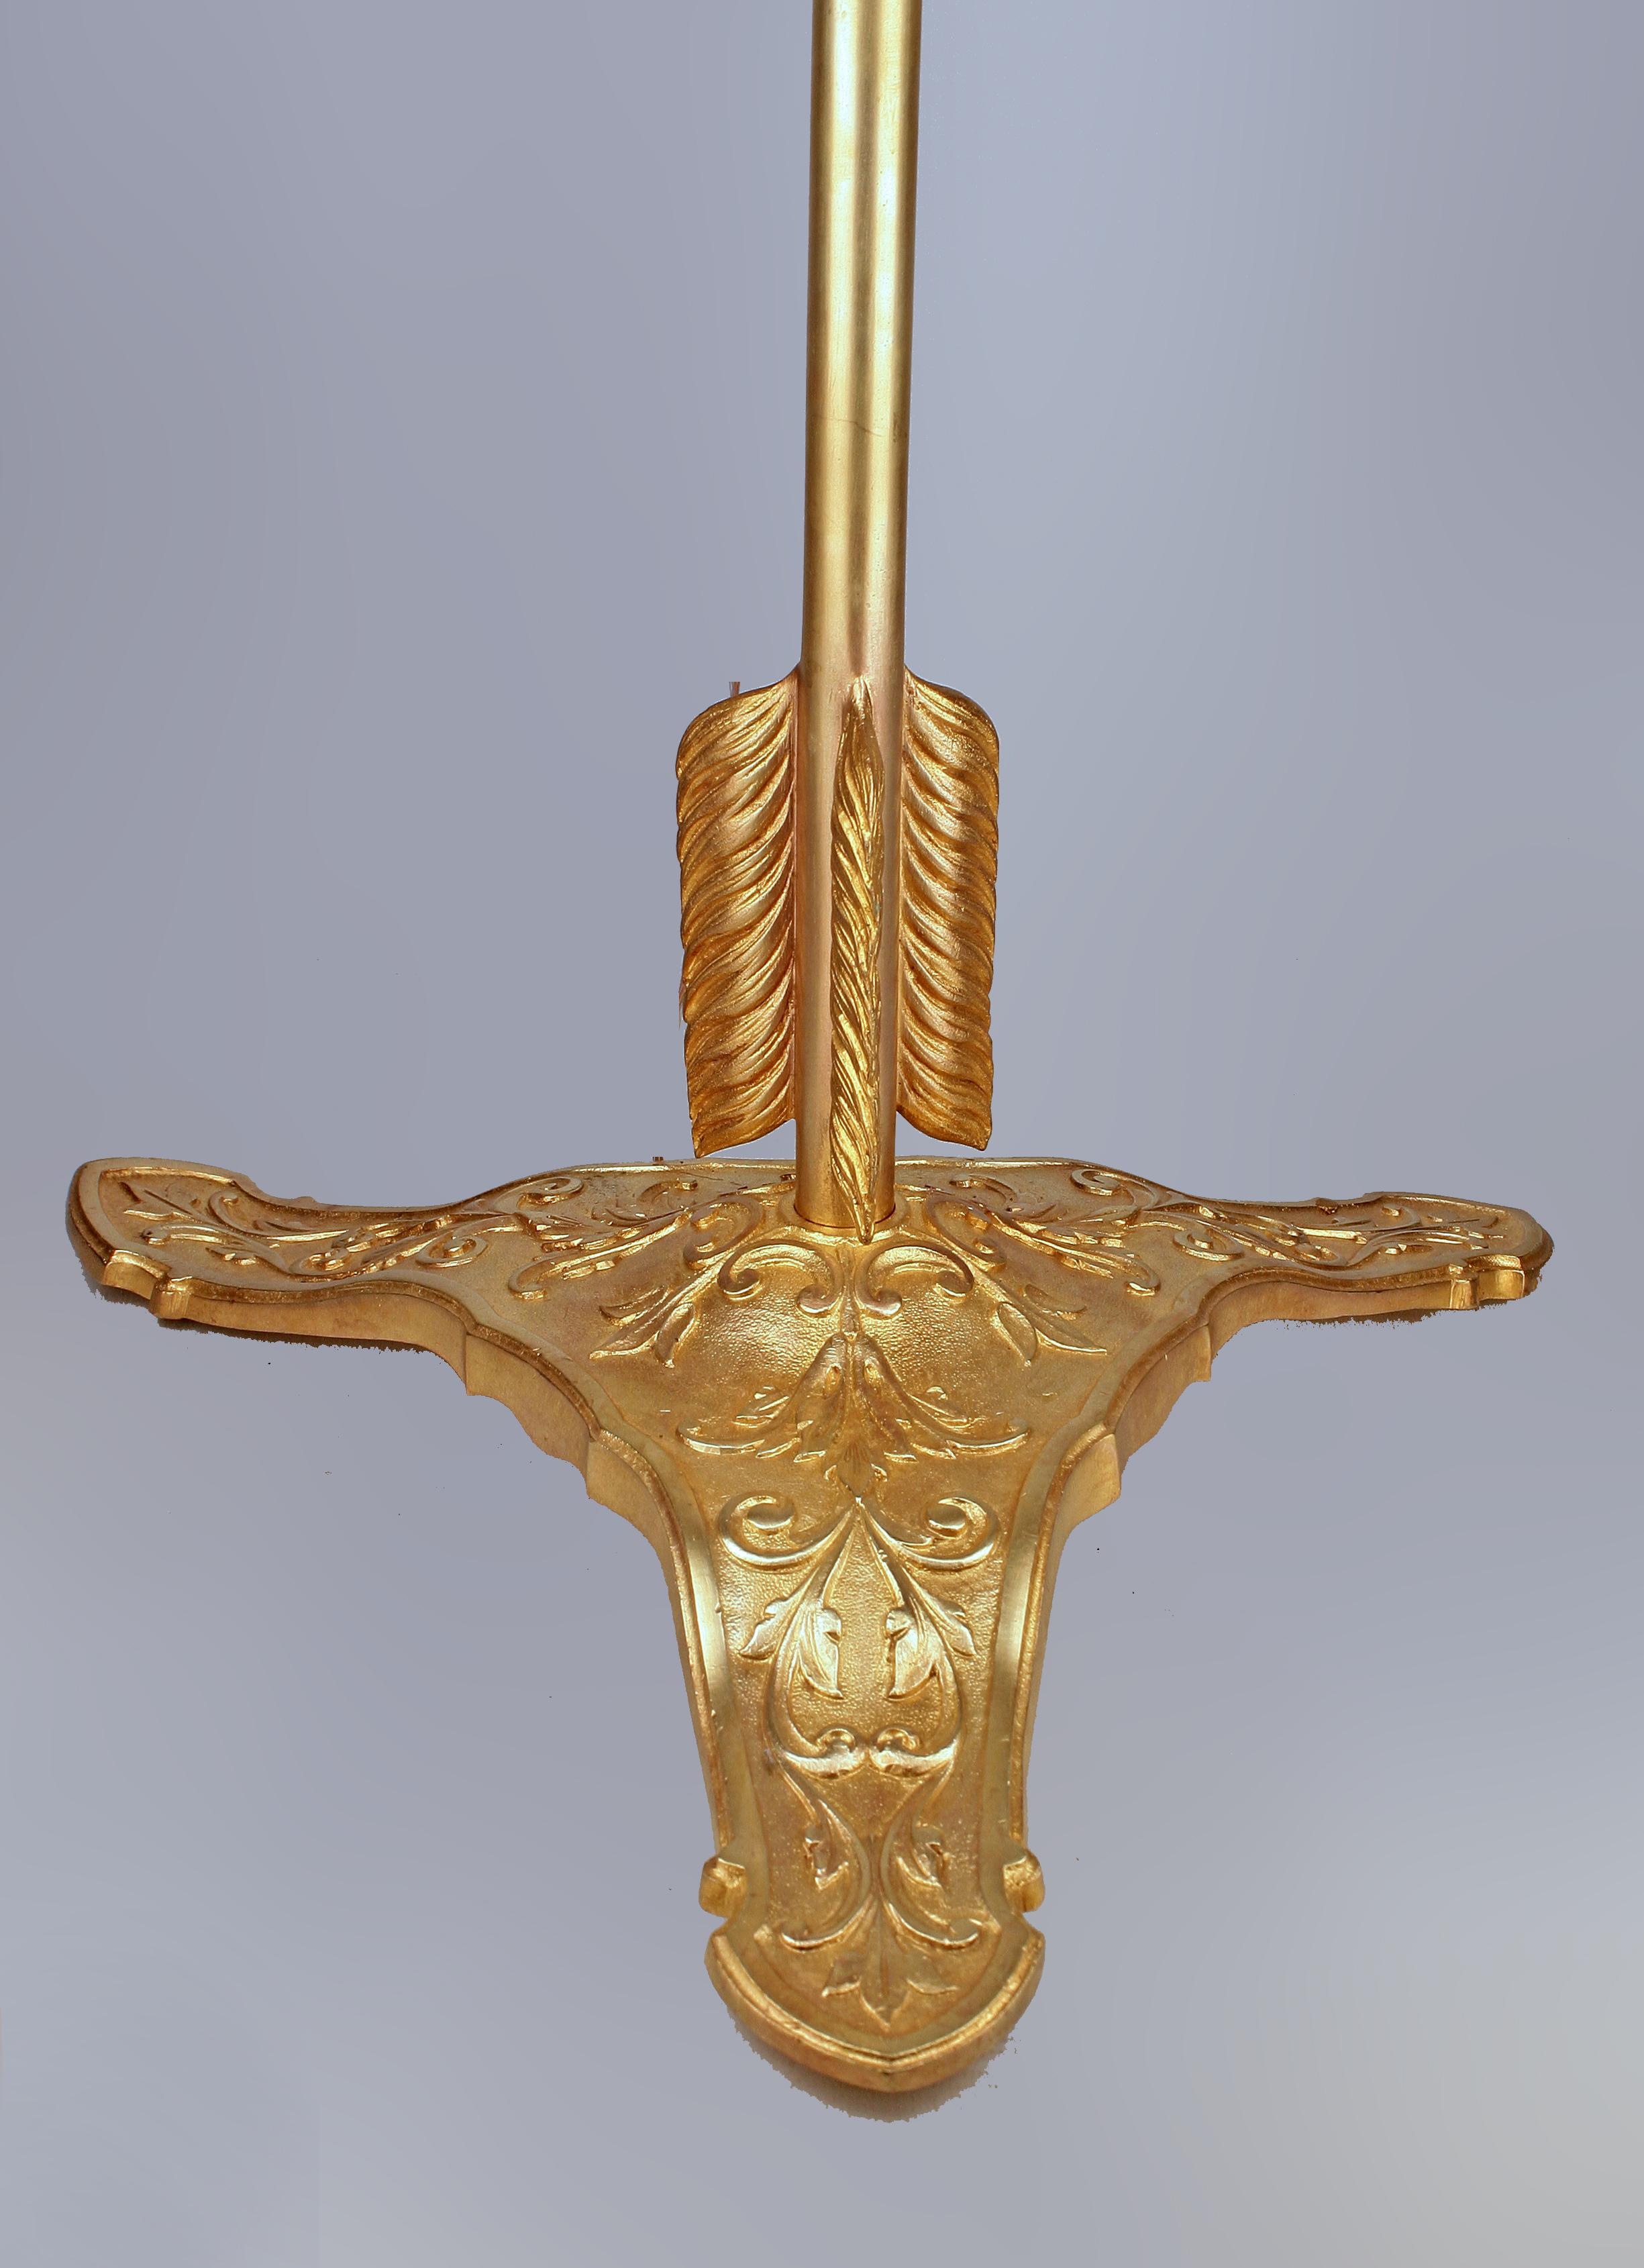 19th Century Late 19th C. French Ormolu/Gilt Bronze Arrow-Shaped Floor Lamp by Maison Jansen For Sale